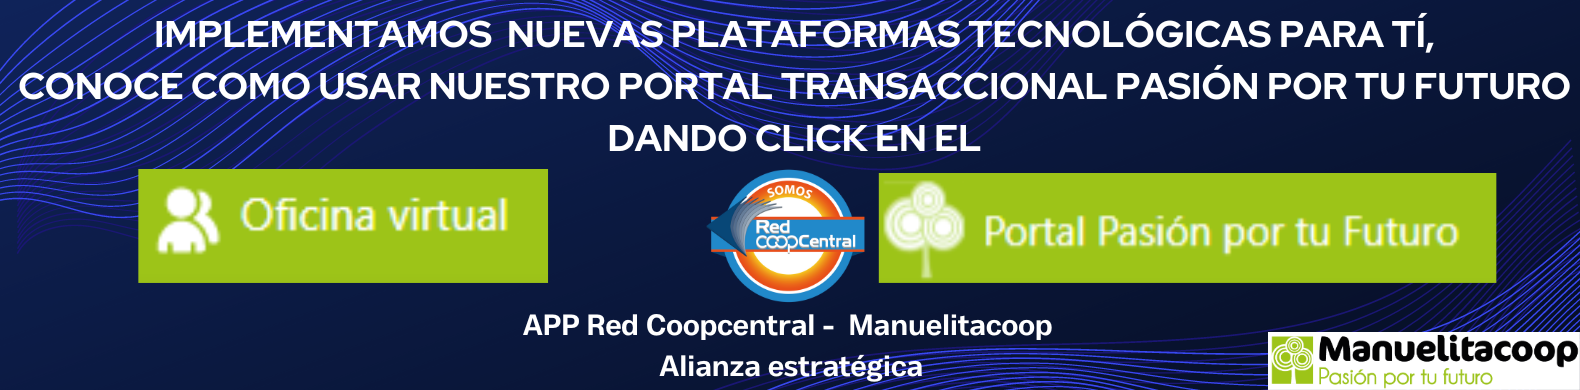 Banner Portal Transaccional